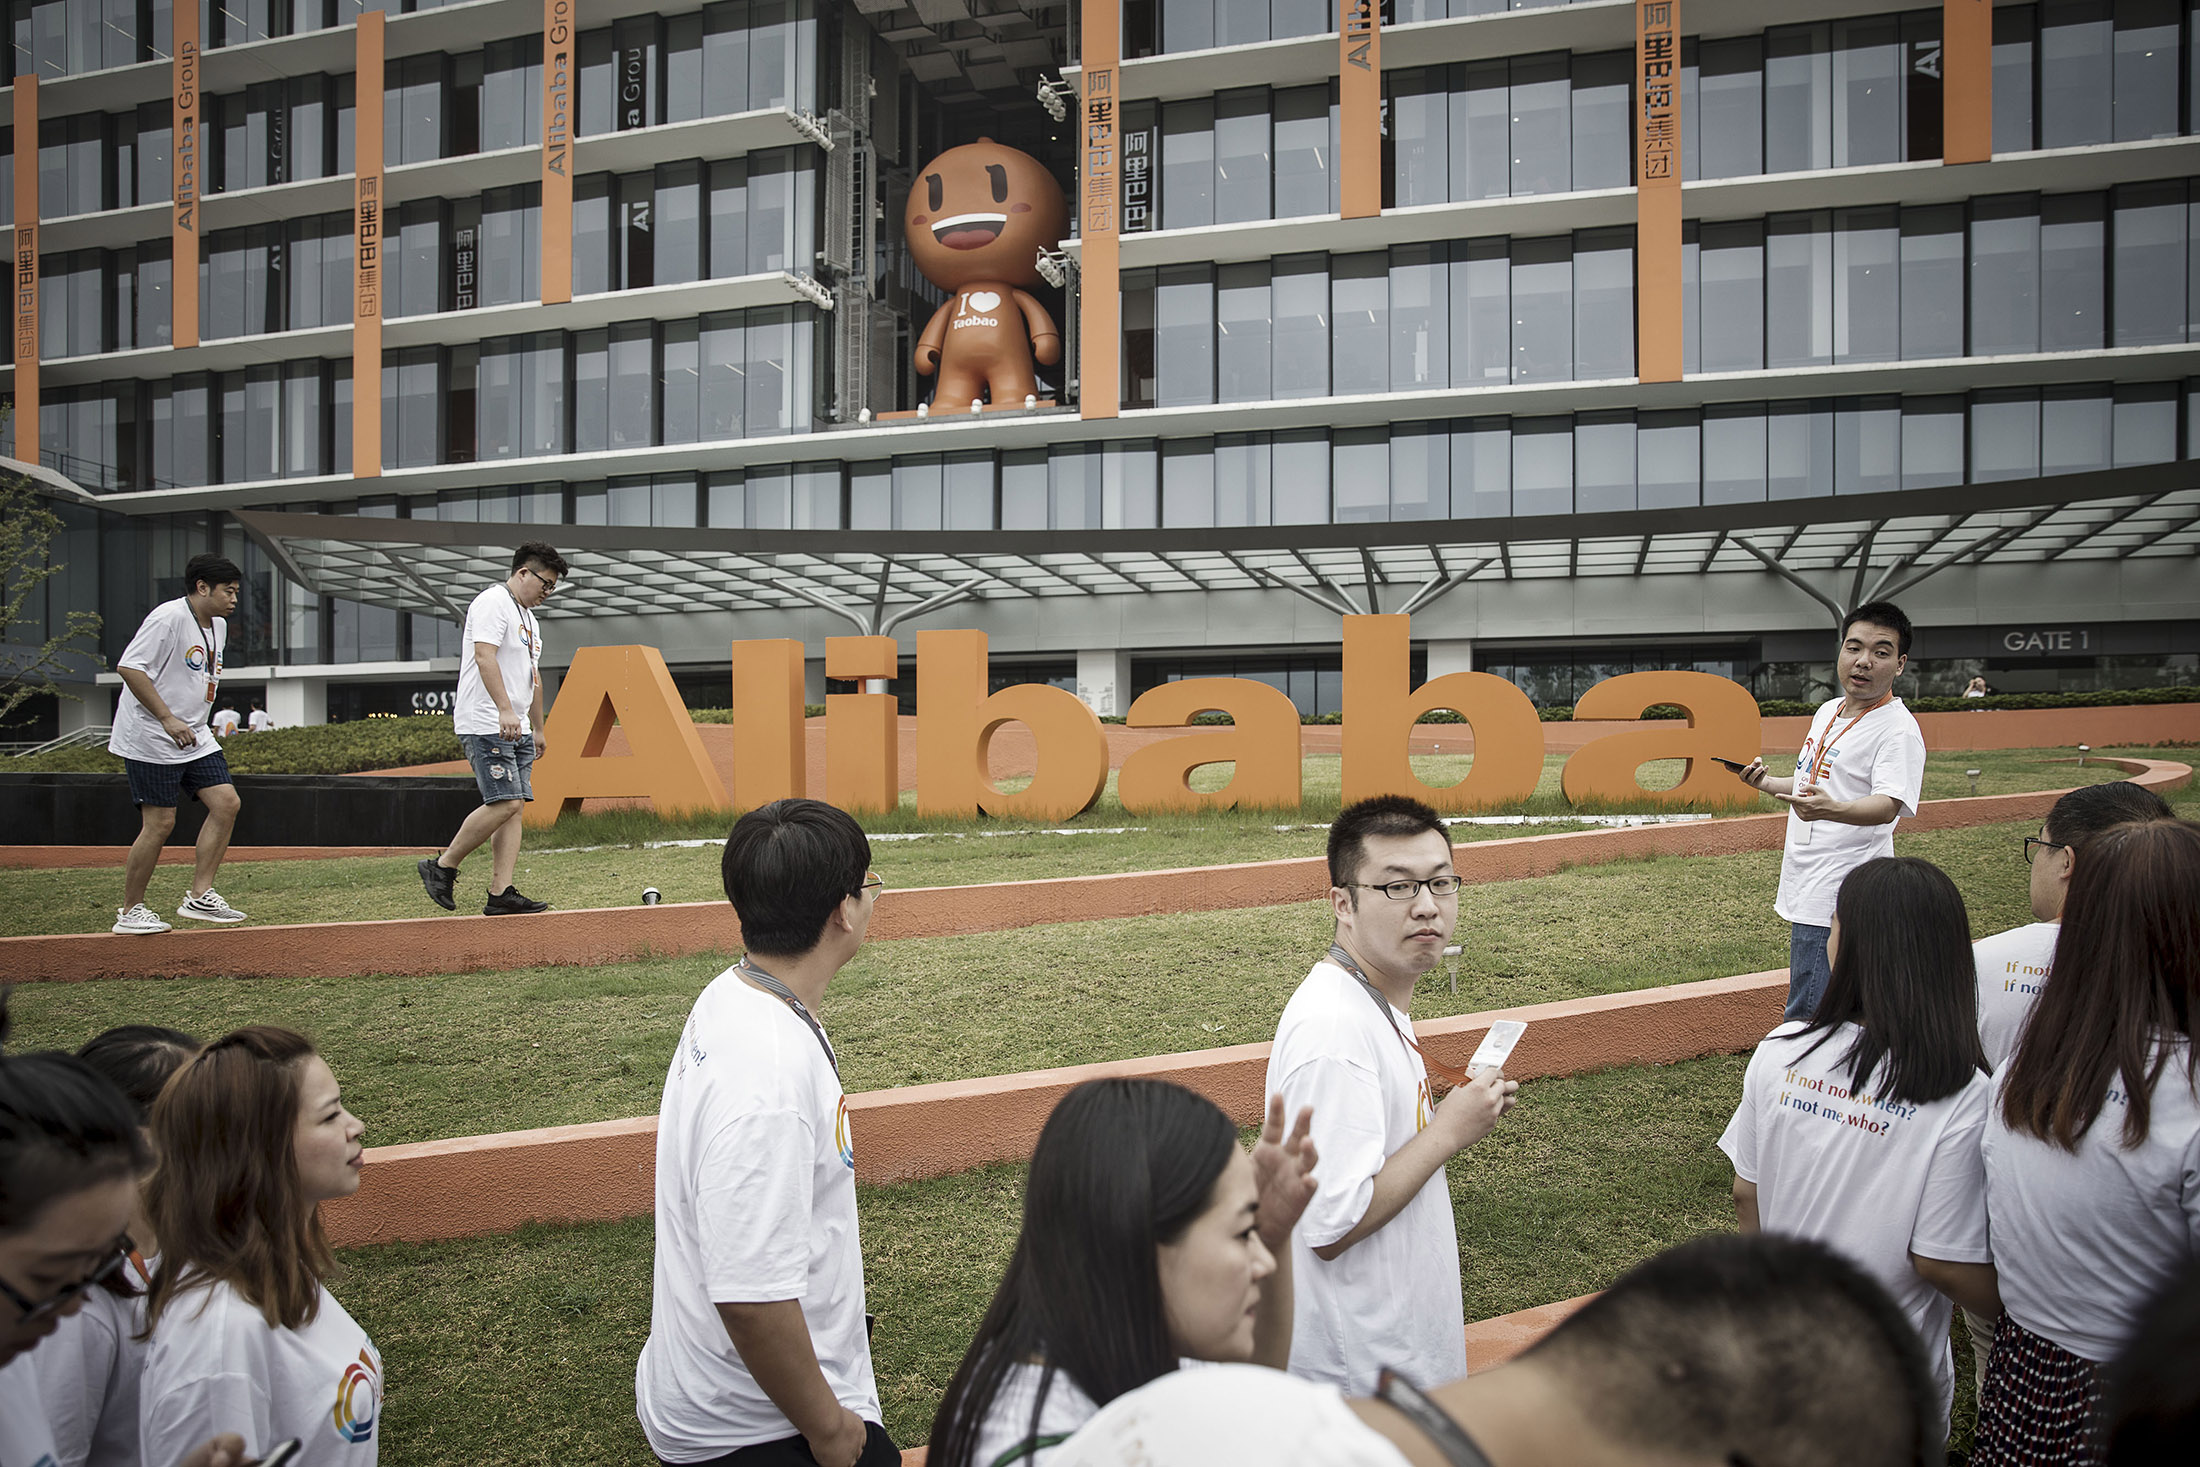 The Alibaba Group headquarters in Hangzhou, China